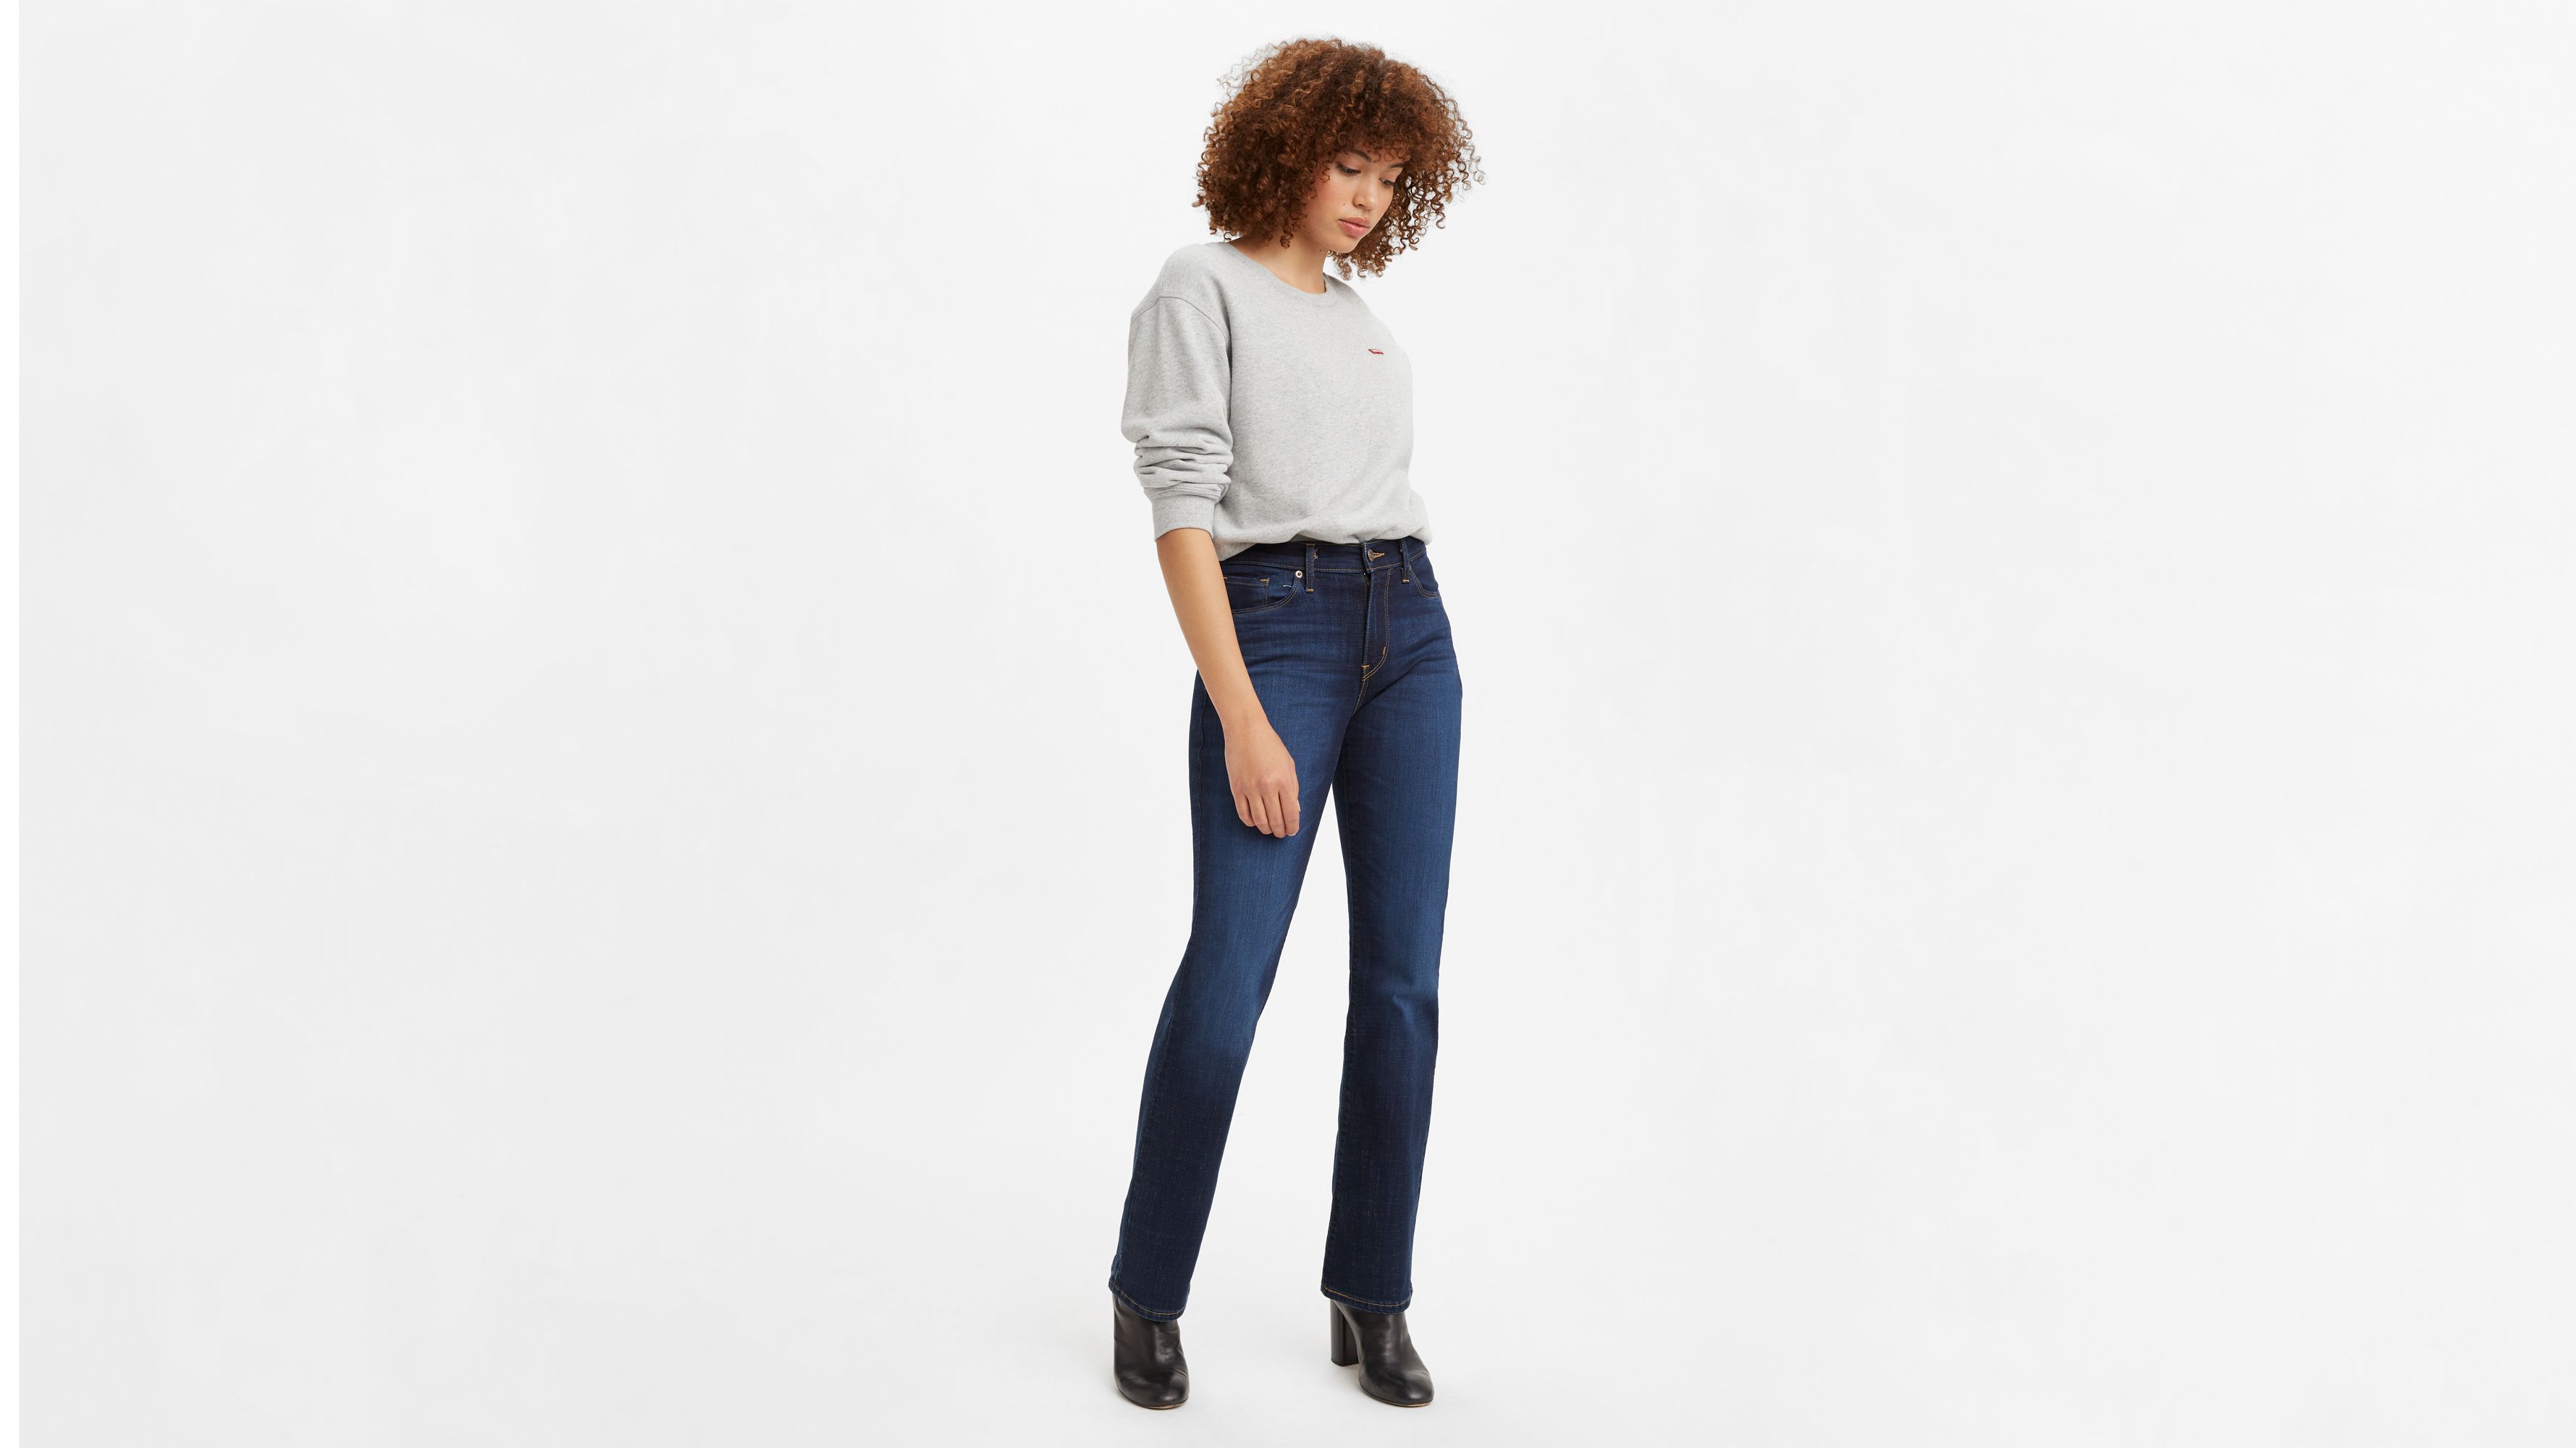 Classic Bootcut Women's Jeans - Dark Wash | Levi's® US